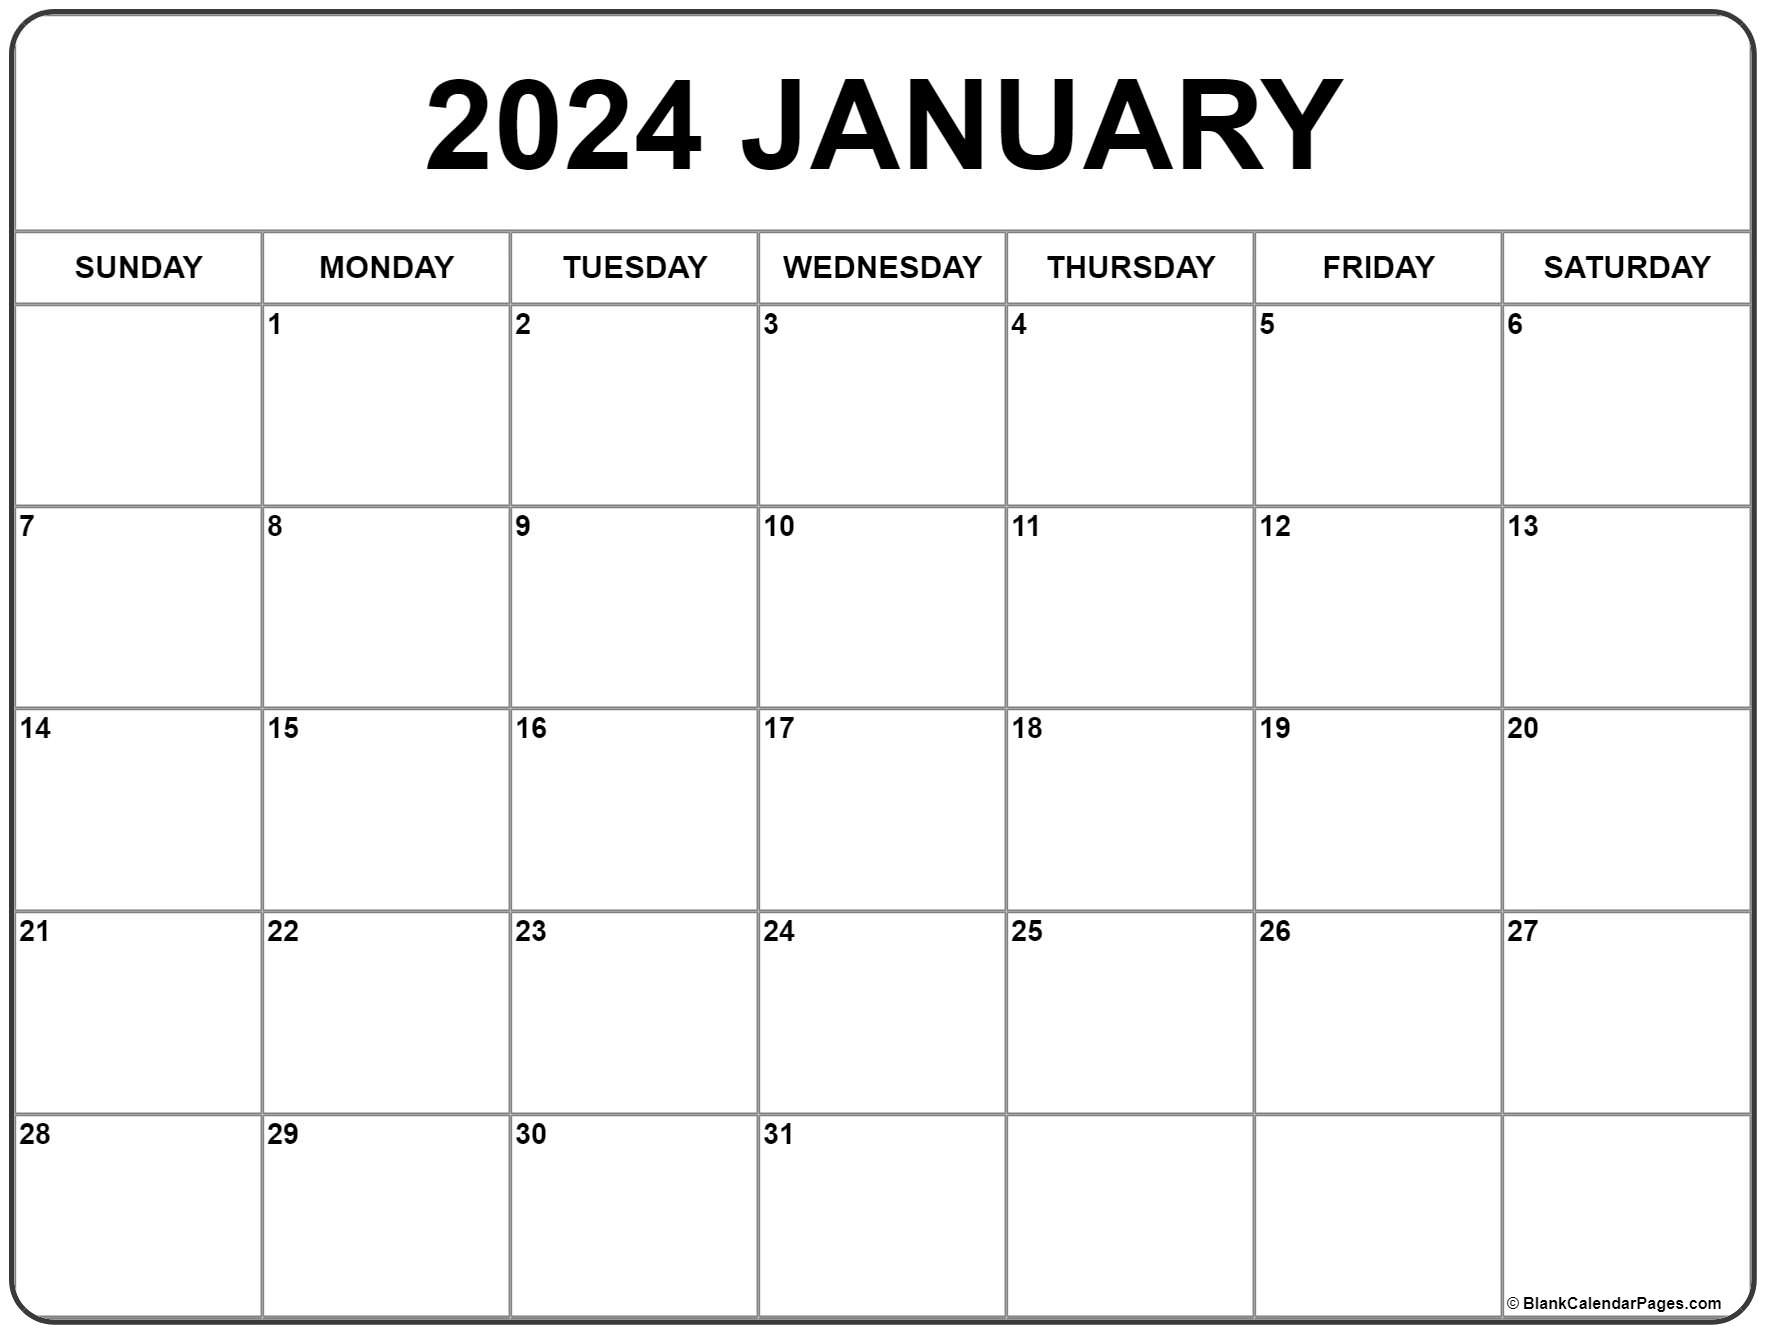 January 2024 Calendar | Free Printable Calendar for Printable Monthly Calendar 2024 January